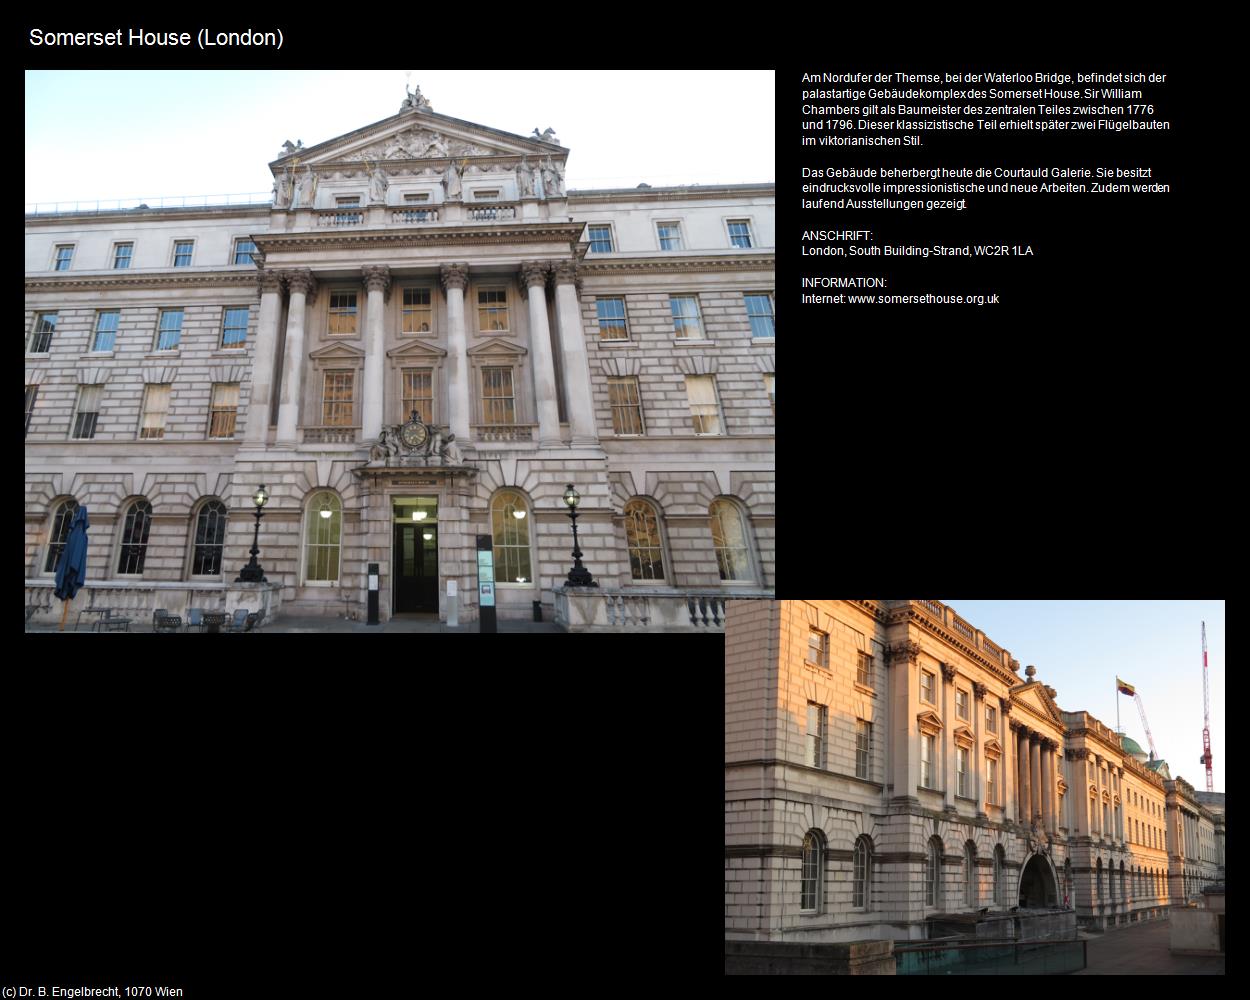 Somerset House (London, England) in Kulturatlas-ENGLAND und WALES